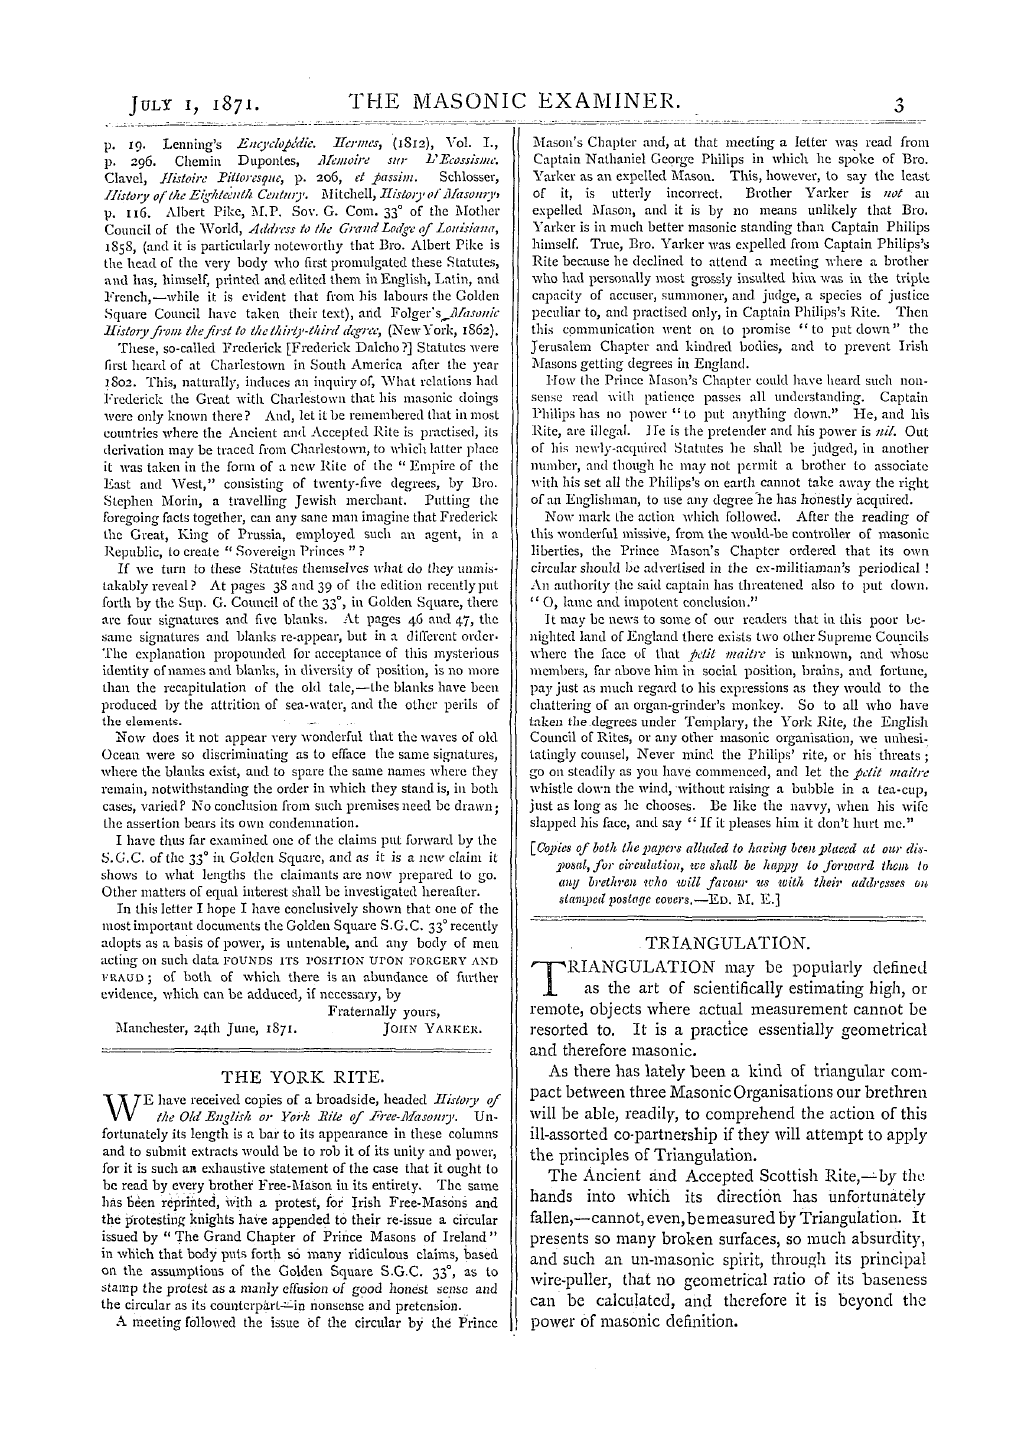 The Masonic Examiner: 1871-07-01 - Correspondence.